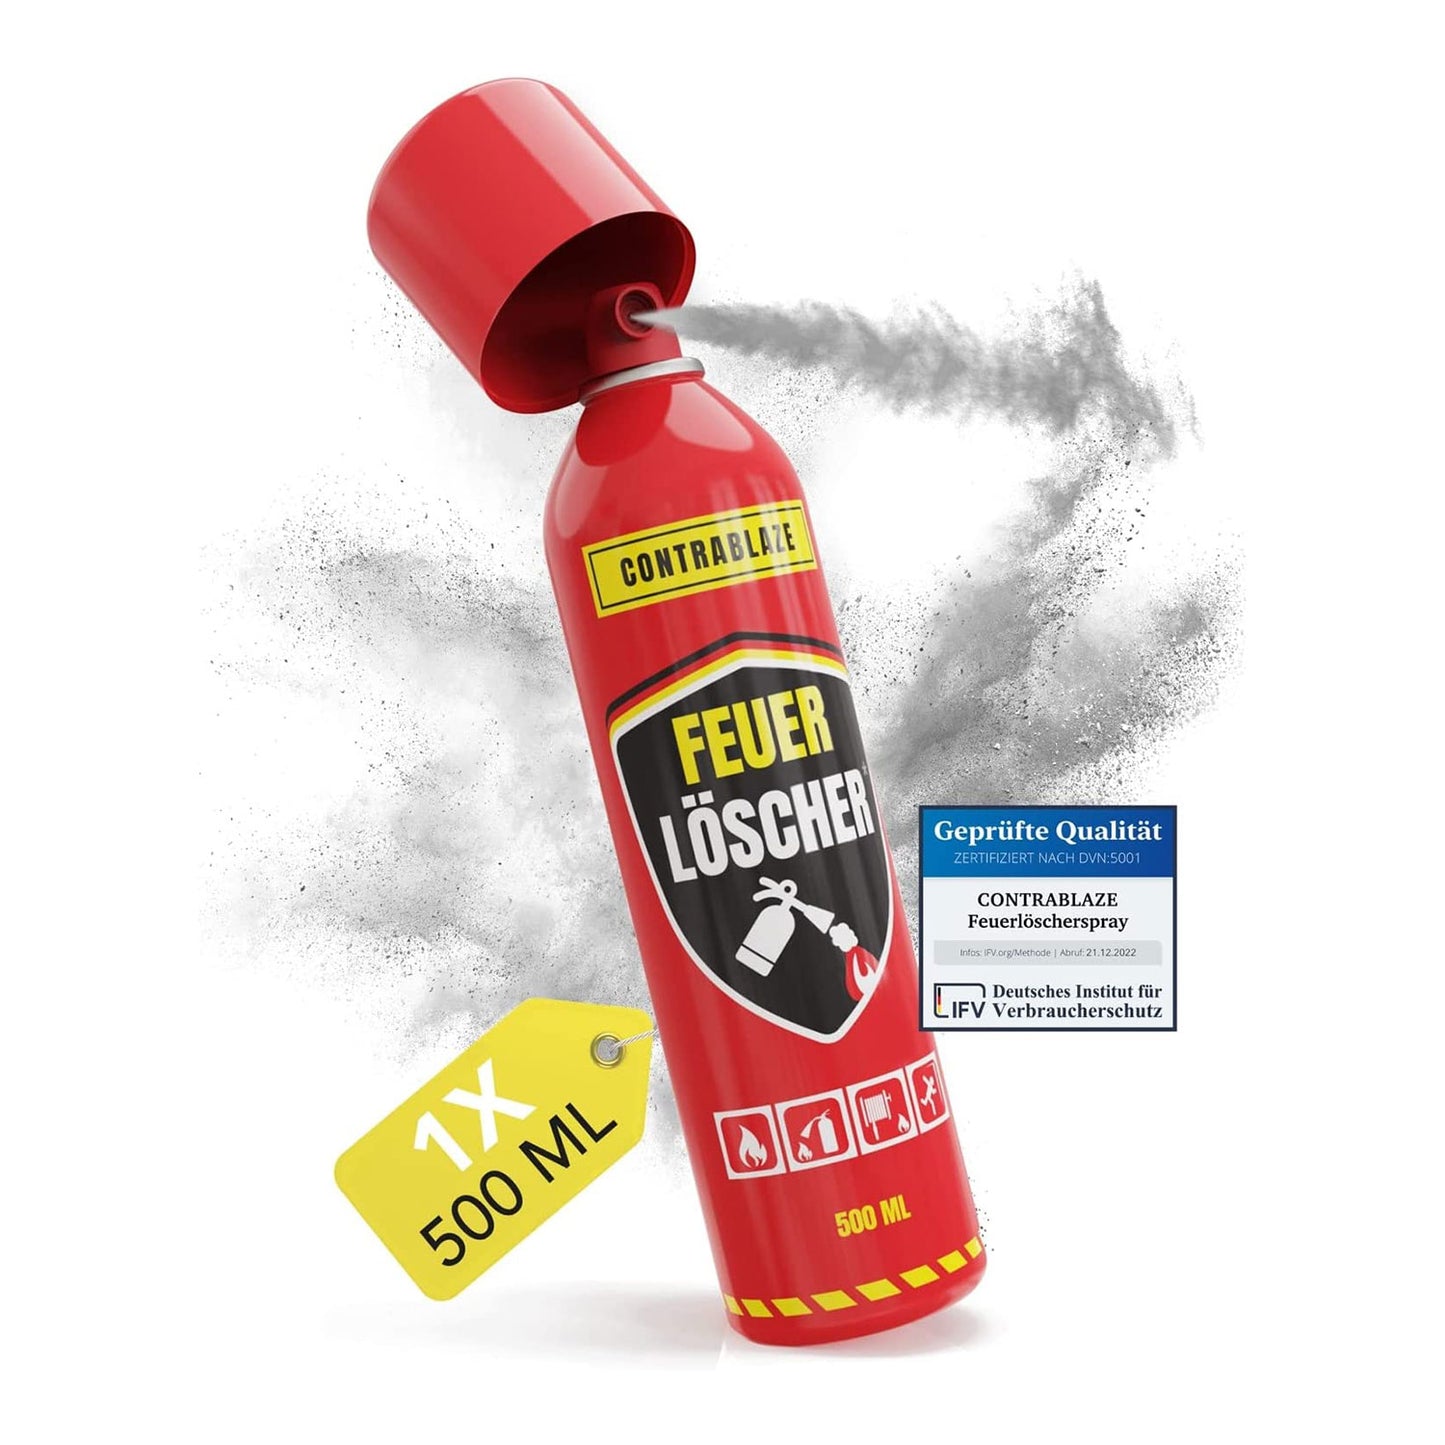 Contrablaze fire extinguisher